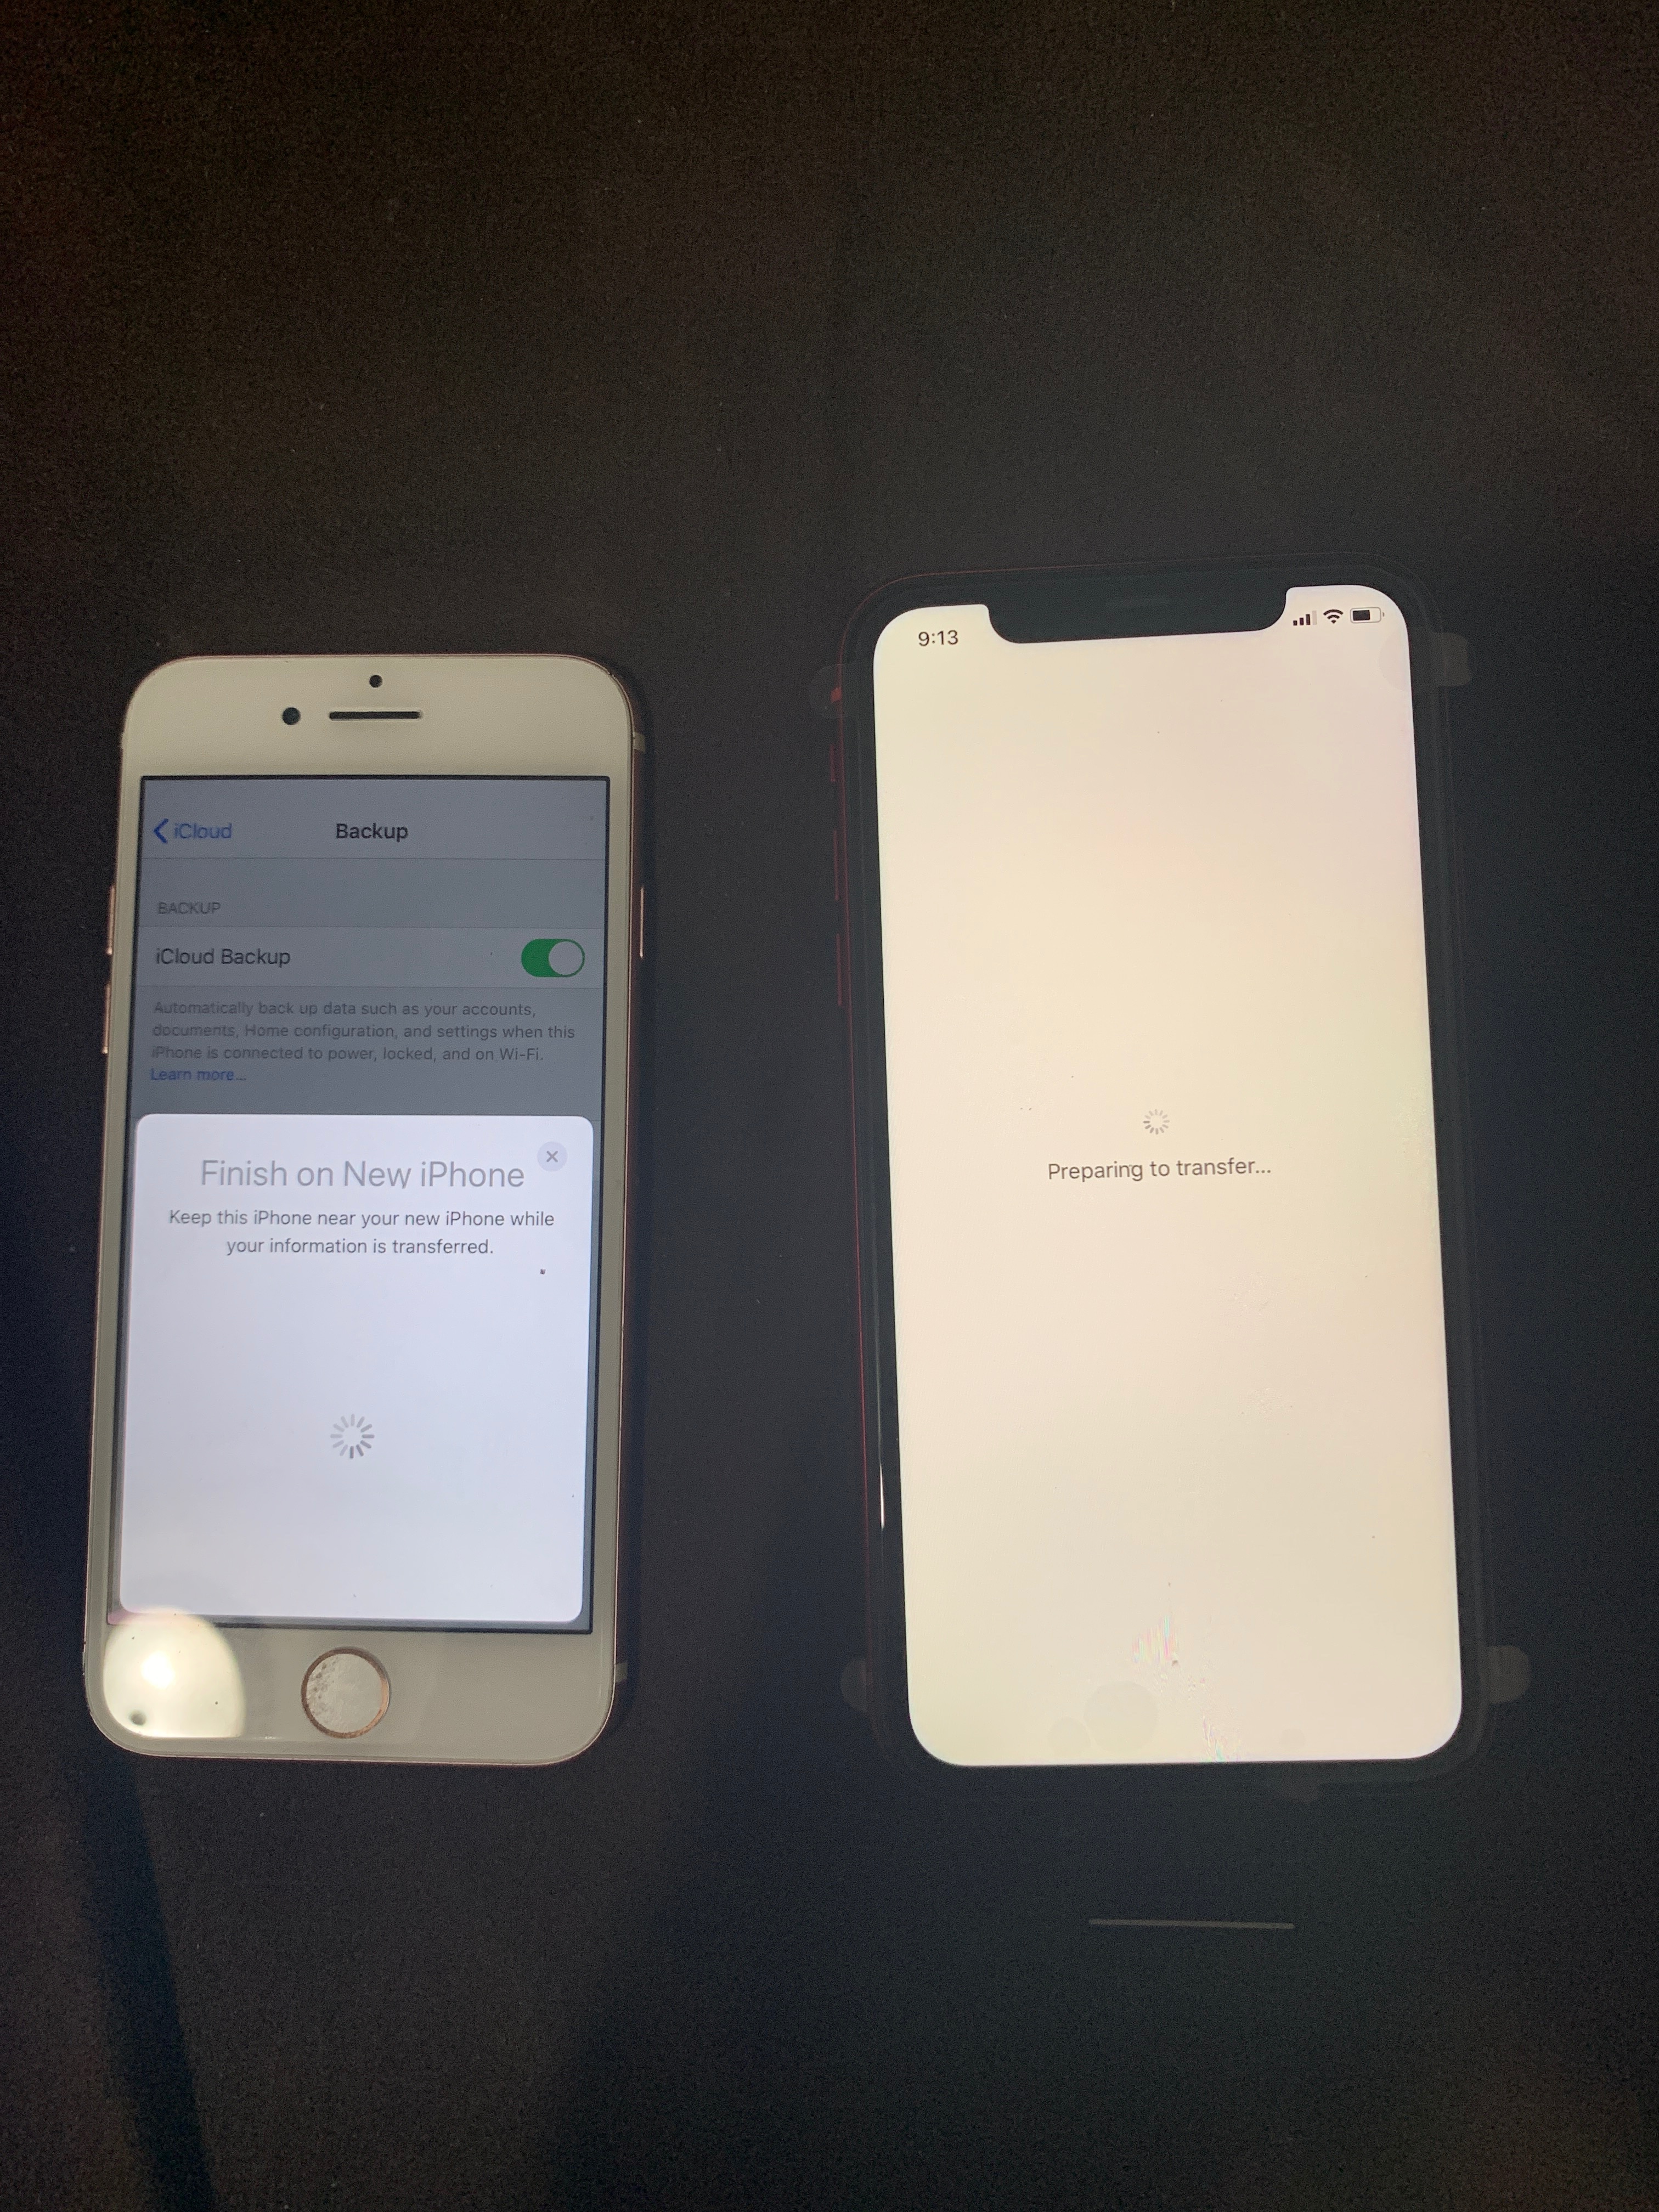 Iphone Stuck On “Preparing To Transfer” - Apple Community